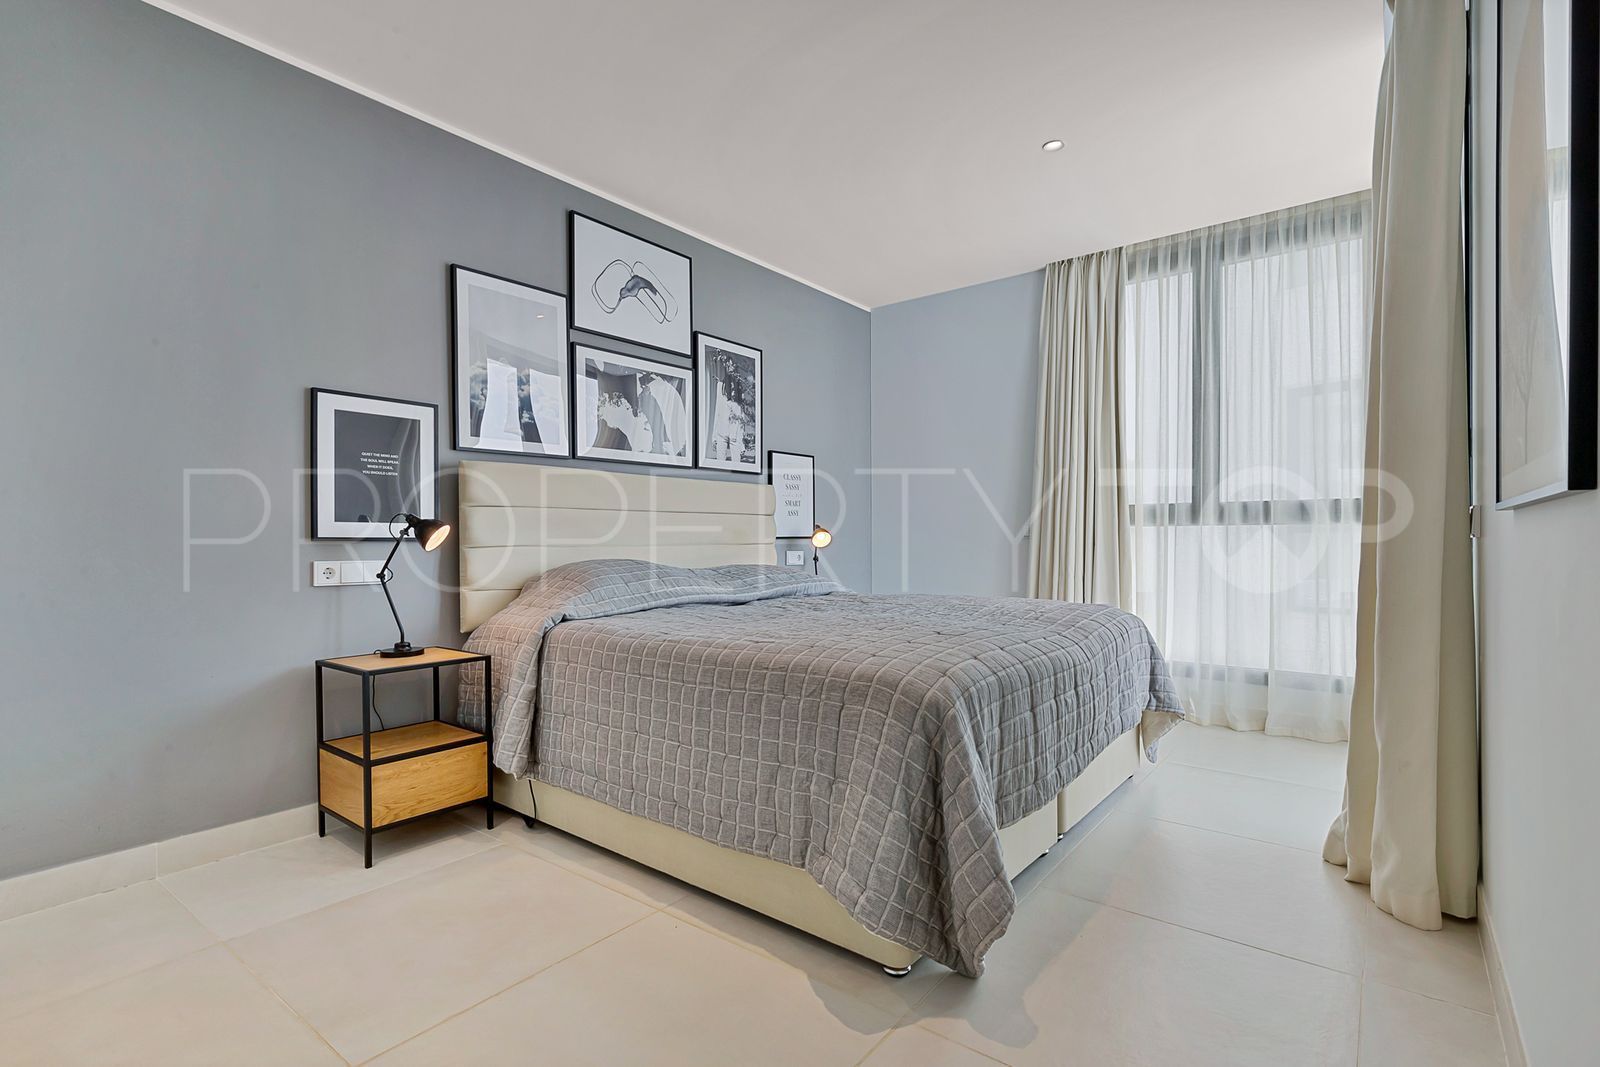 3 bedrooms apartment in El Higueron for sale